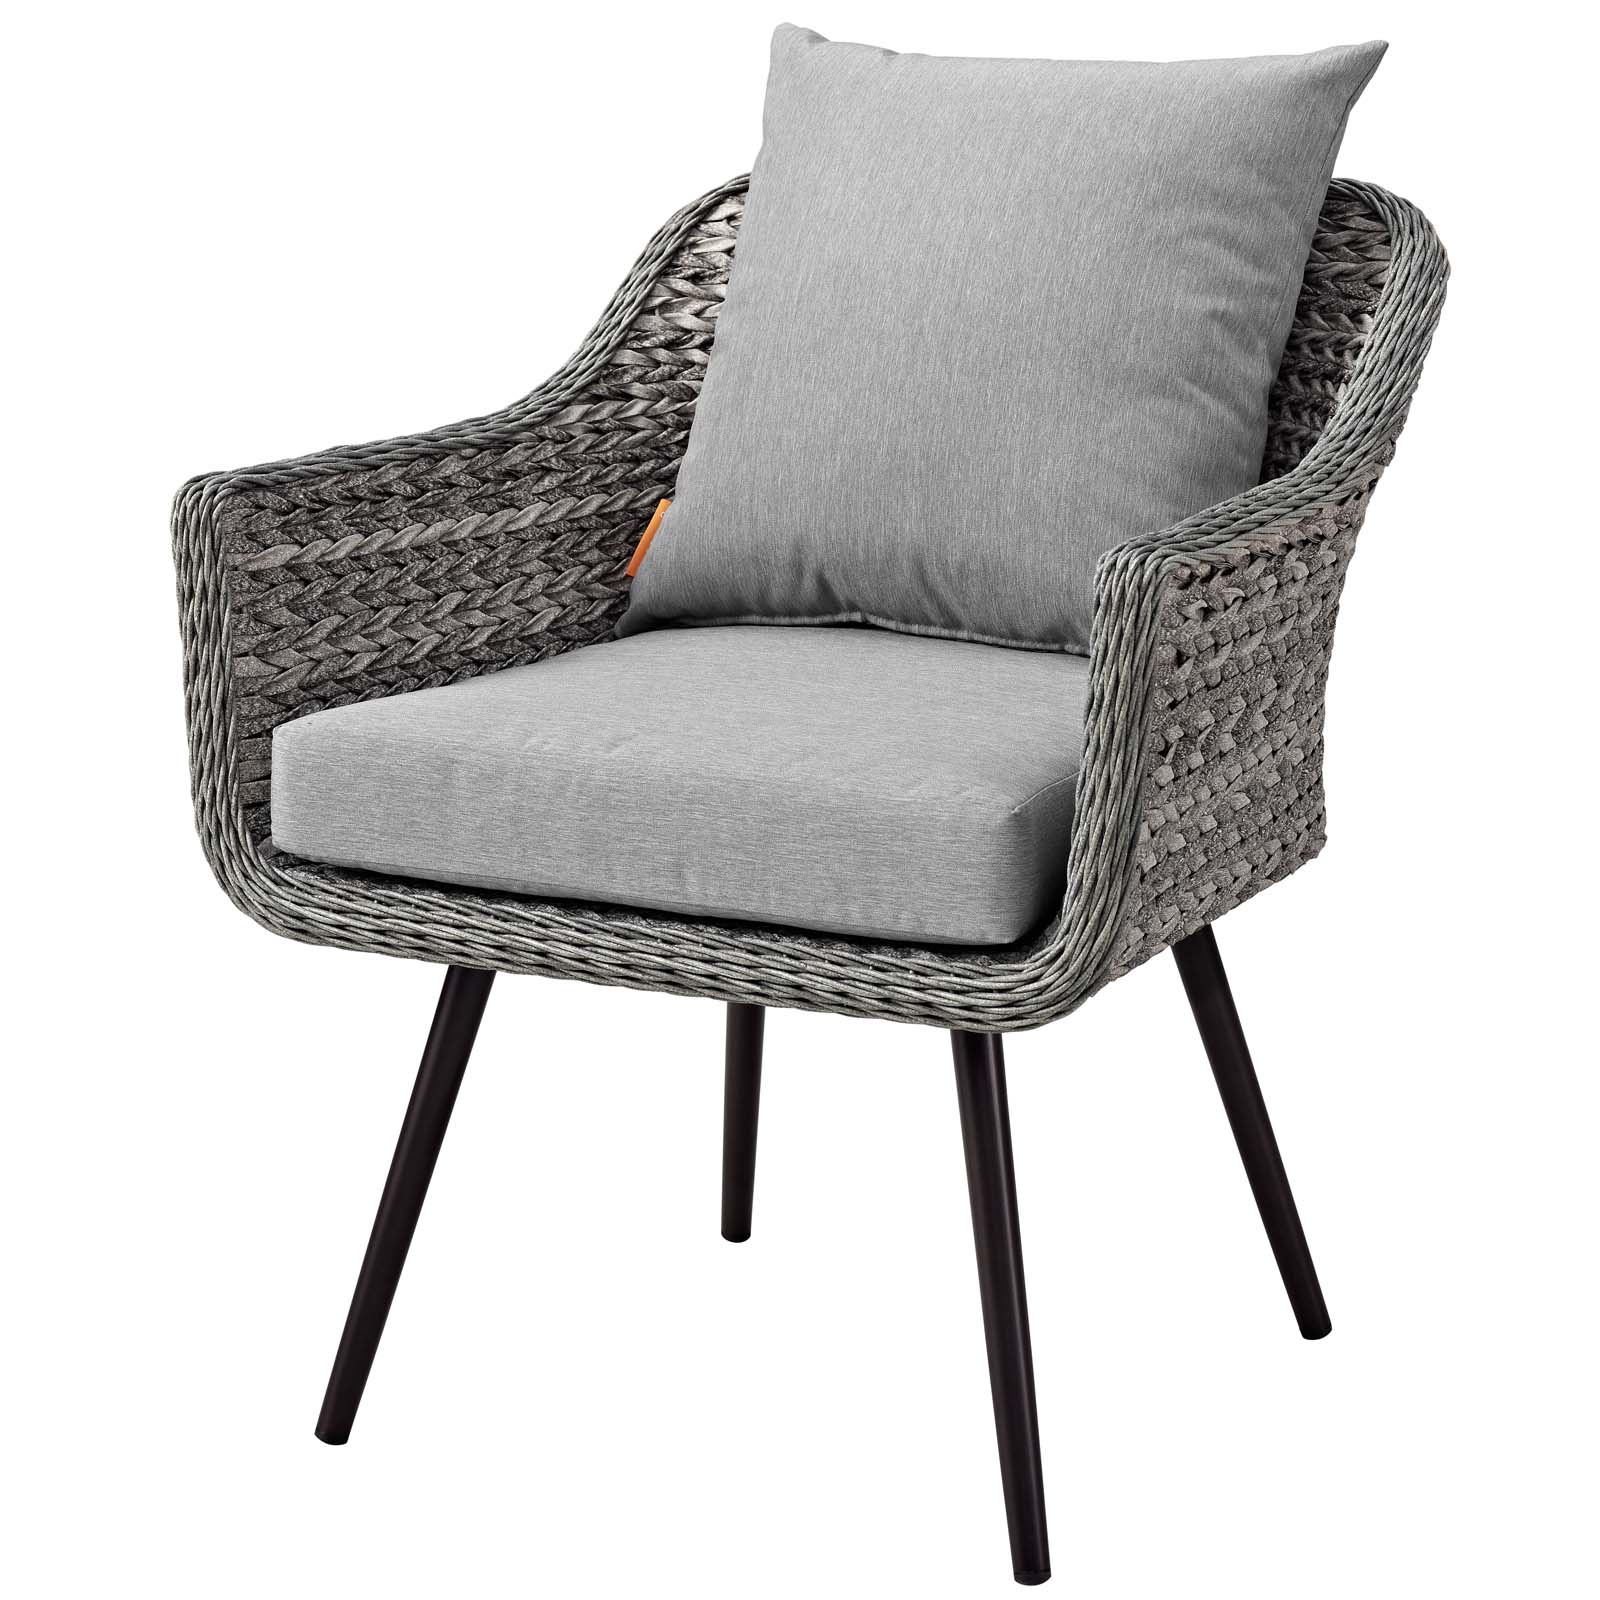 Modern Contemporary Urban Design Outdoor Patio Balcony Garden Furniture Lounge Chair Armchair, Rattan Wicker Aluminum Metal, Grey Gray - image 1 of 5